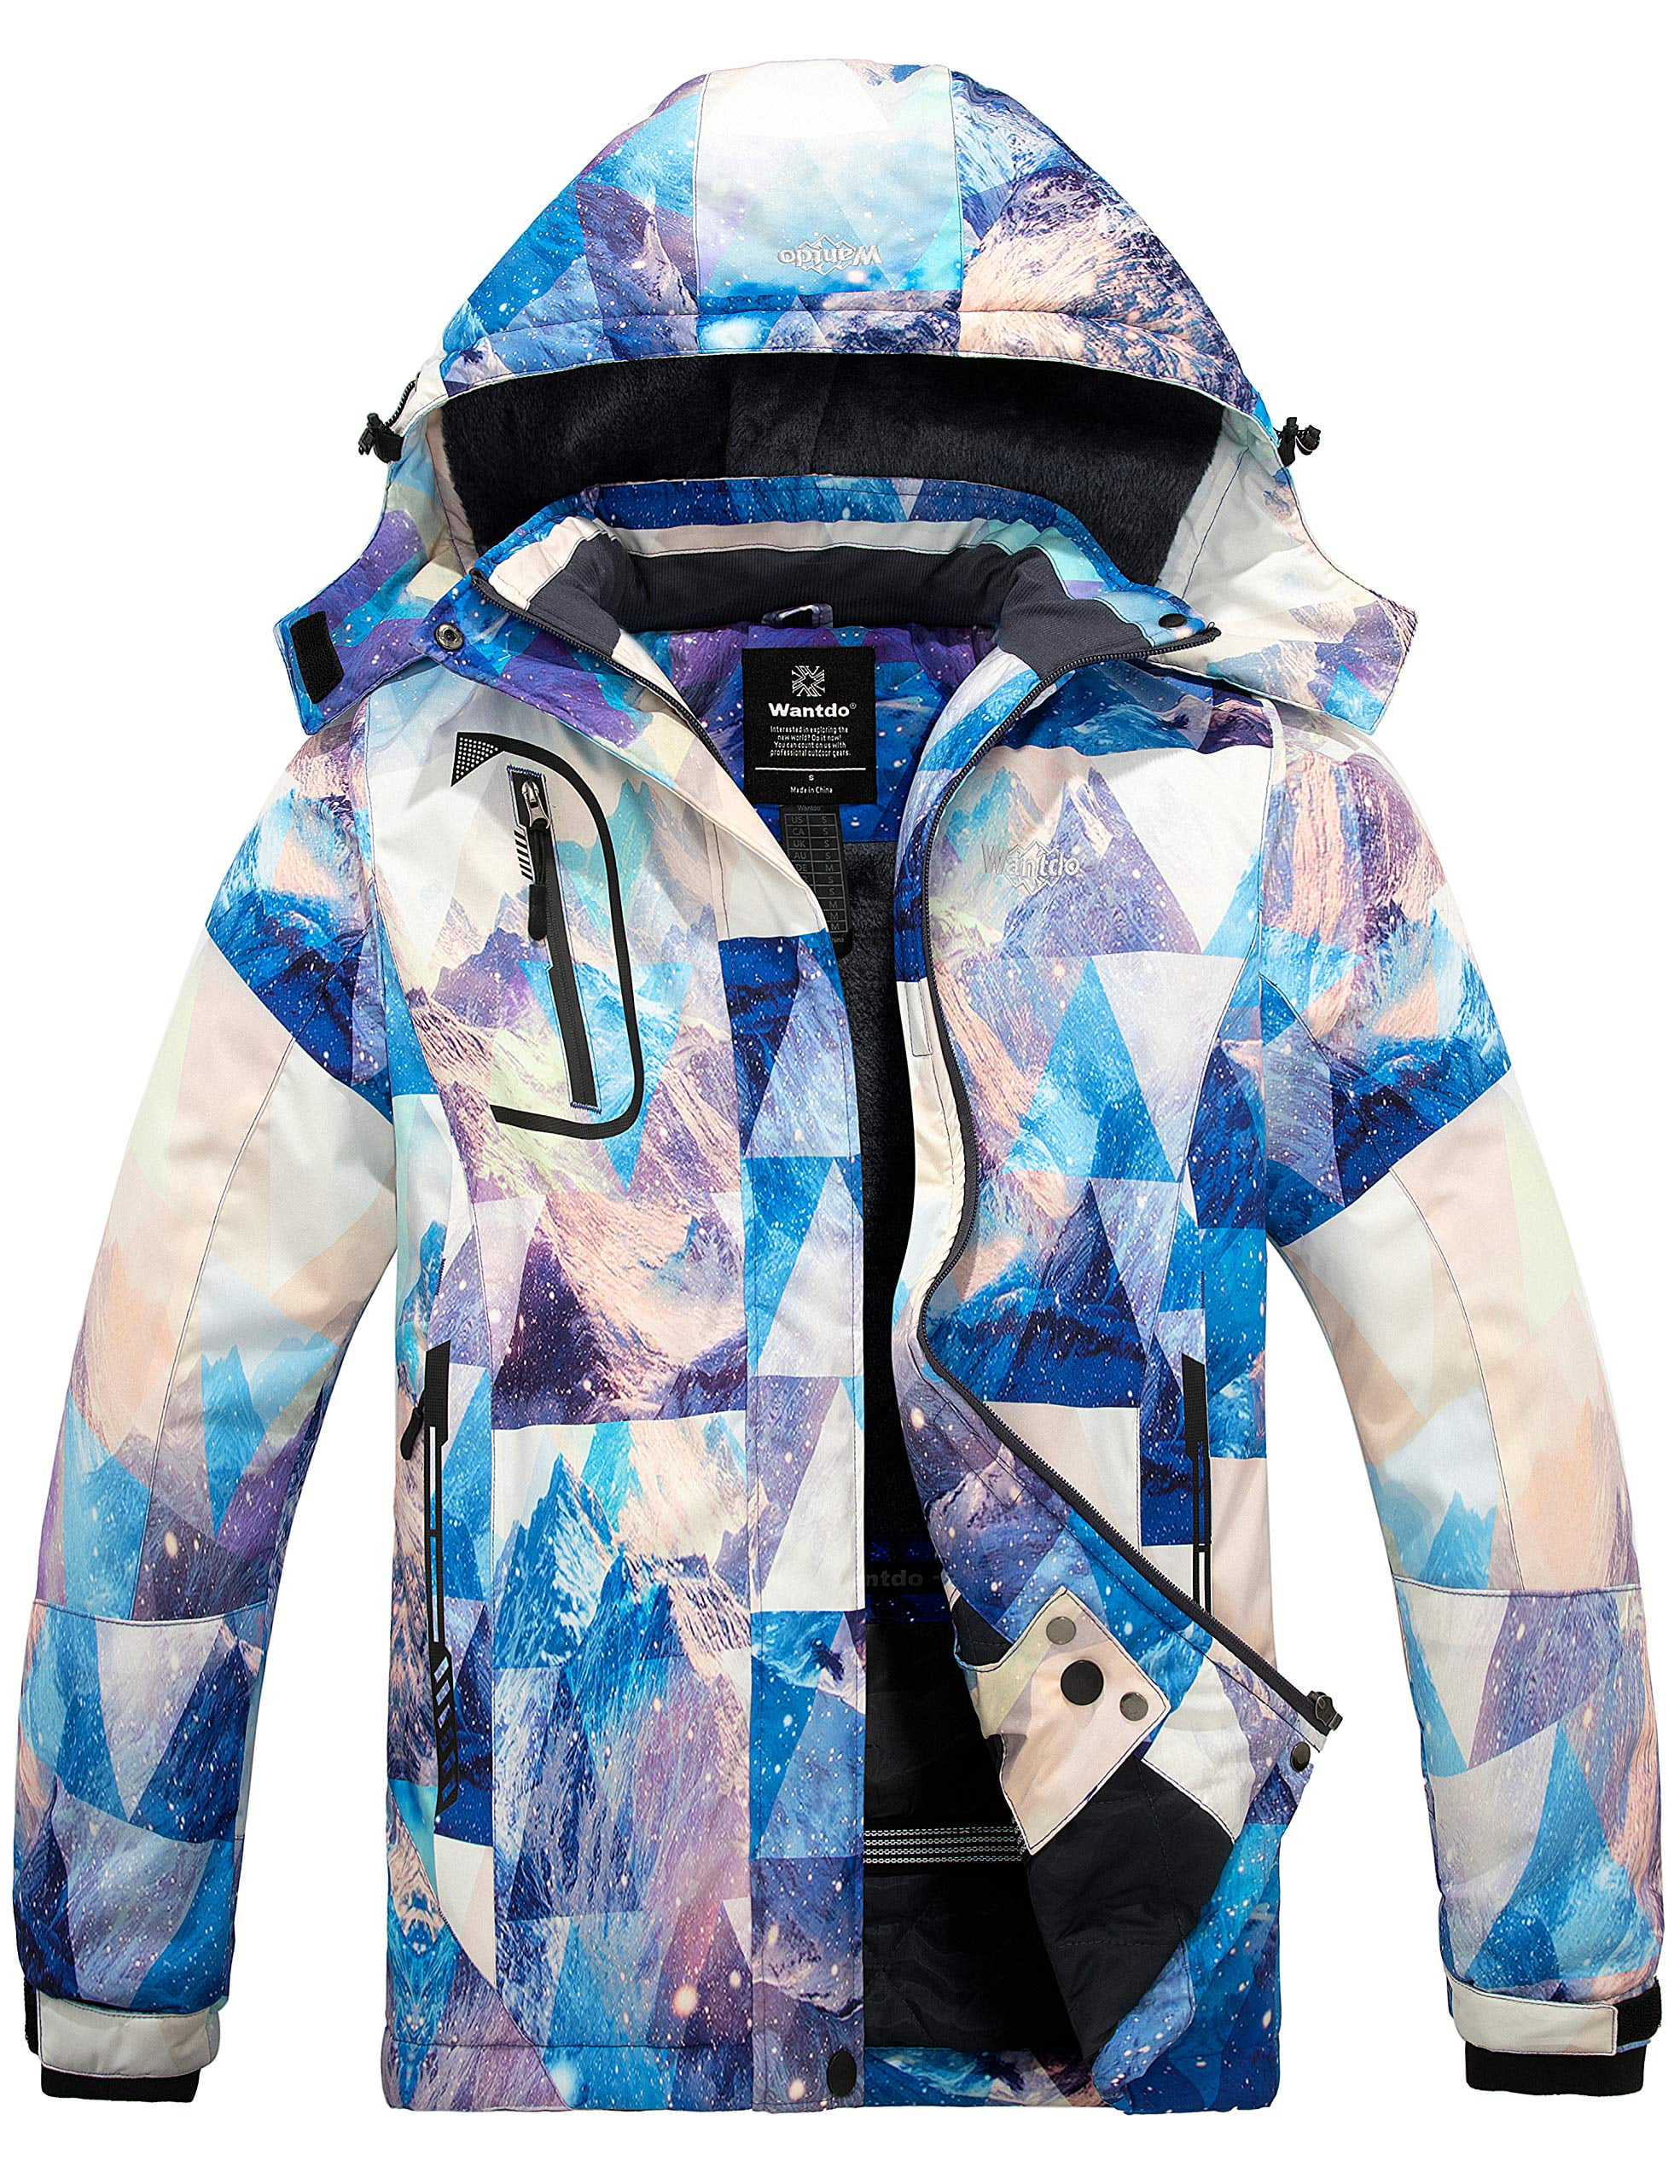 Girl's Waterproof Ski Jacket Warm Winter Fleece Snow Coat Windproof Snowboarding Rain Jacket 